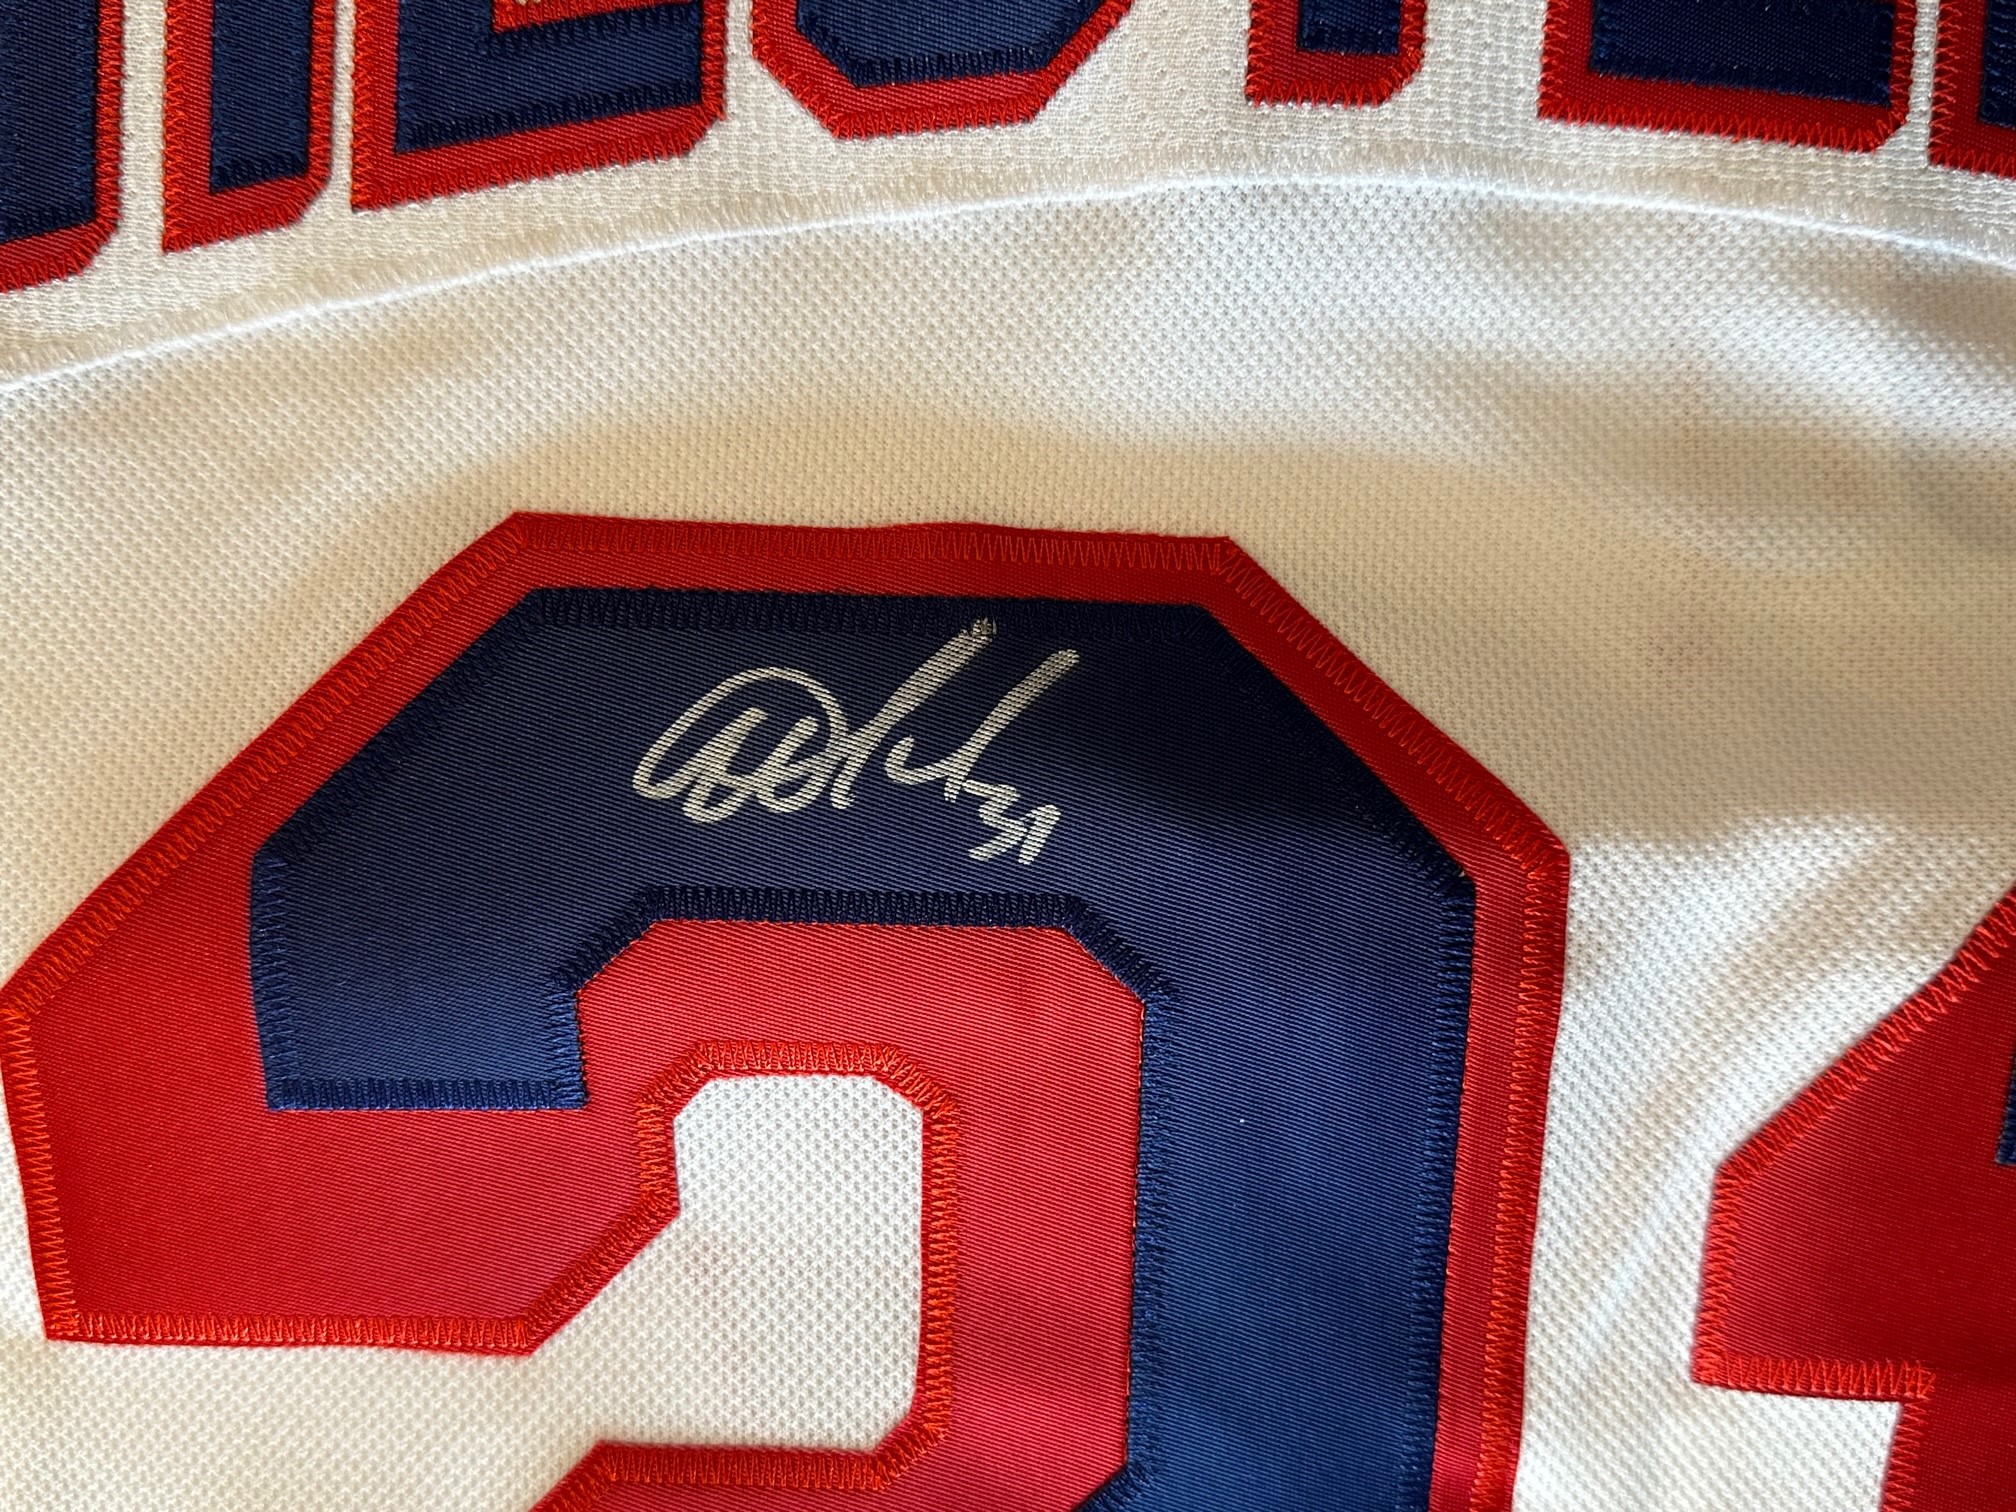 Igor Shesterkin Signed New York Rangers Jersey - The Autograph Source